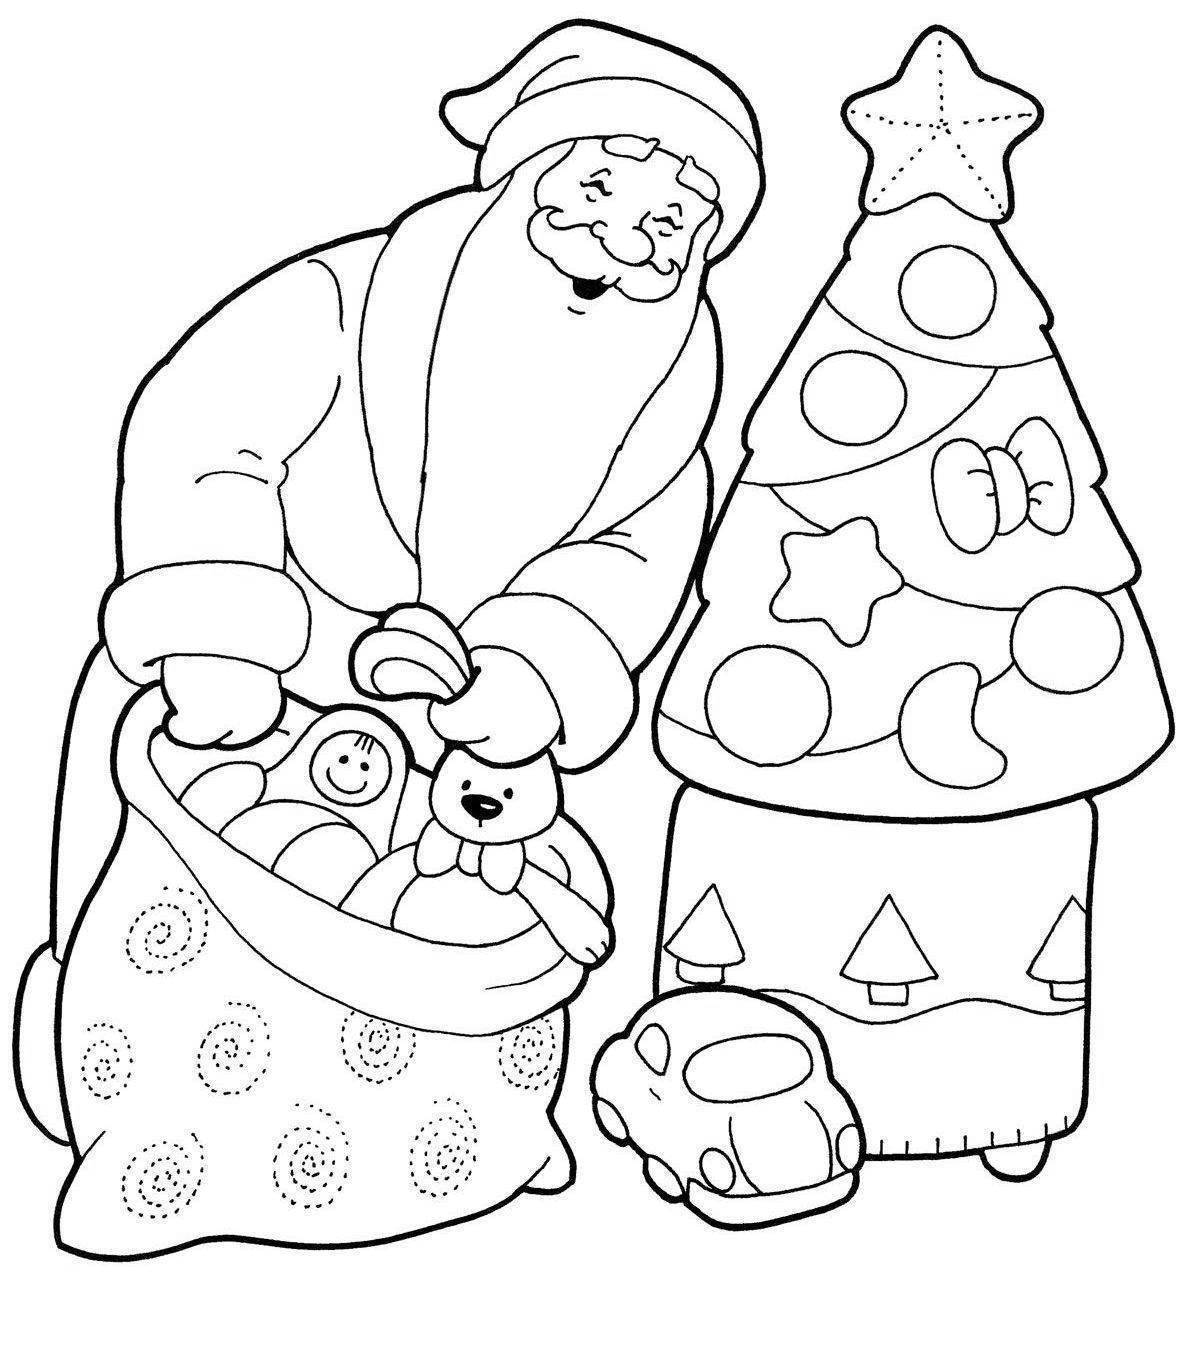 Coloring bright santa claus for kids